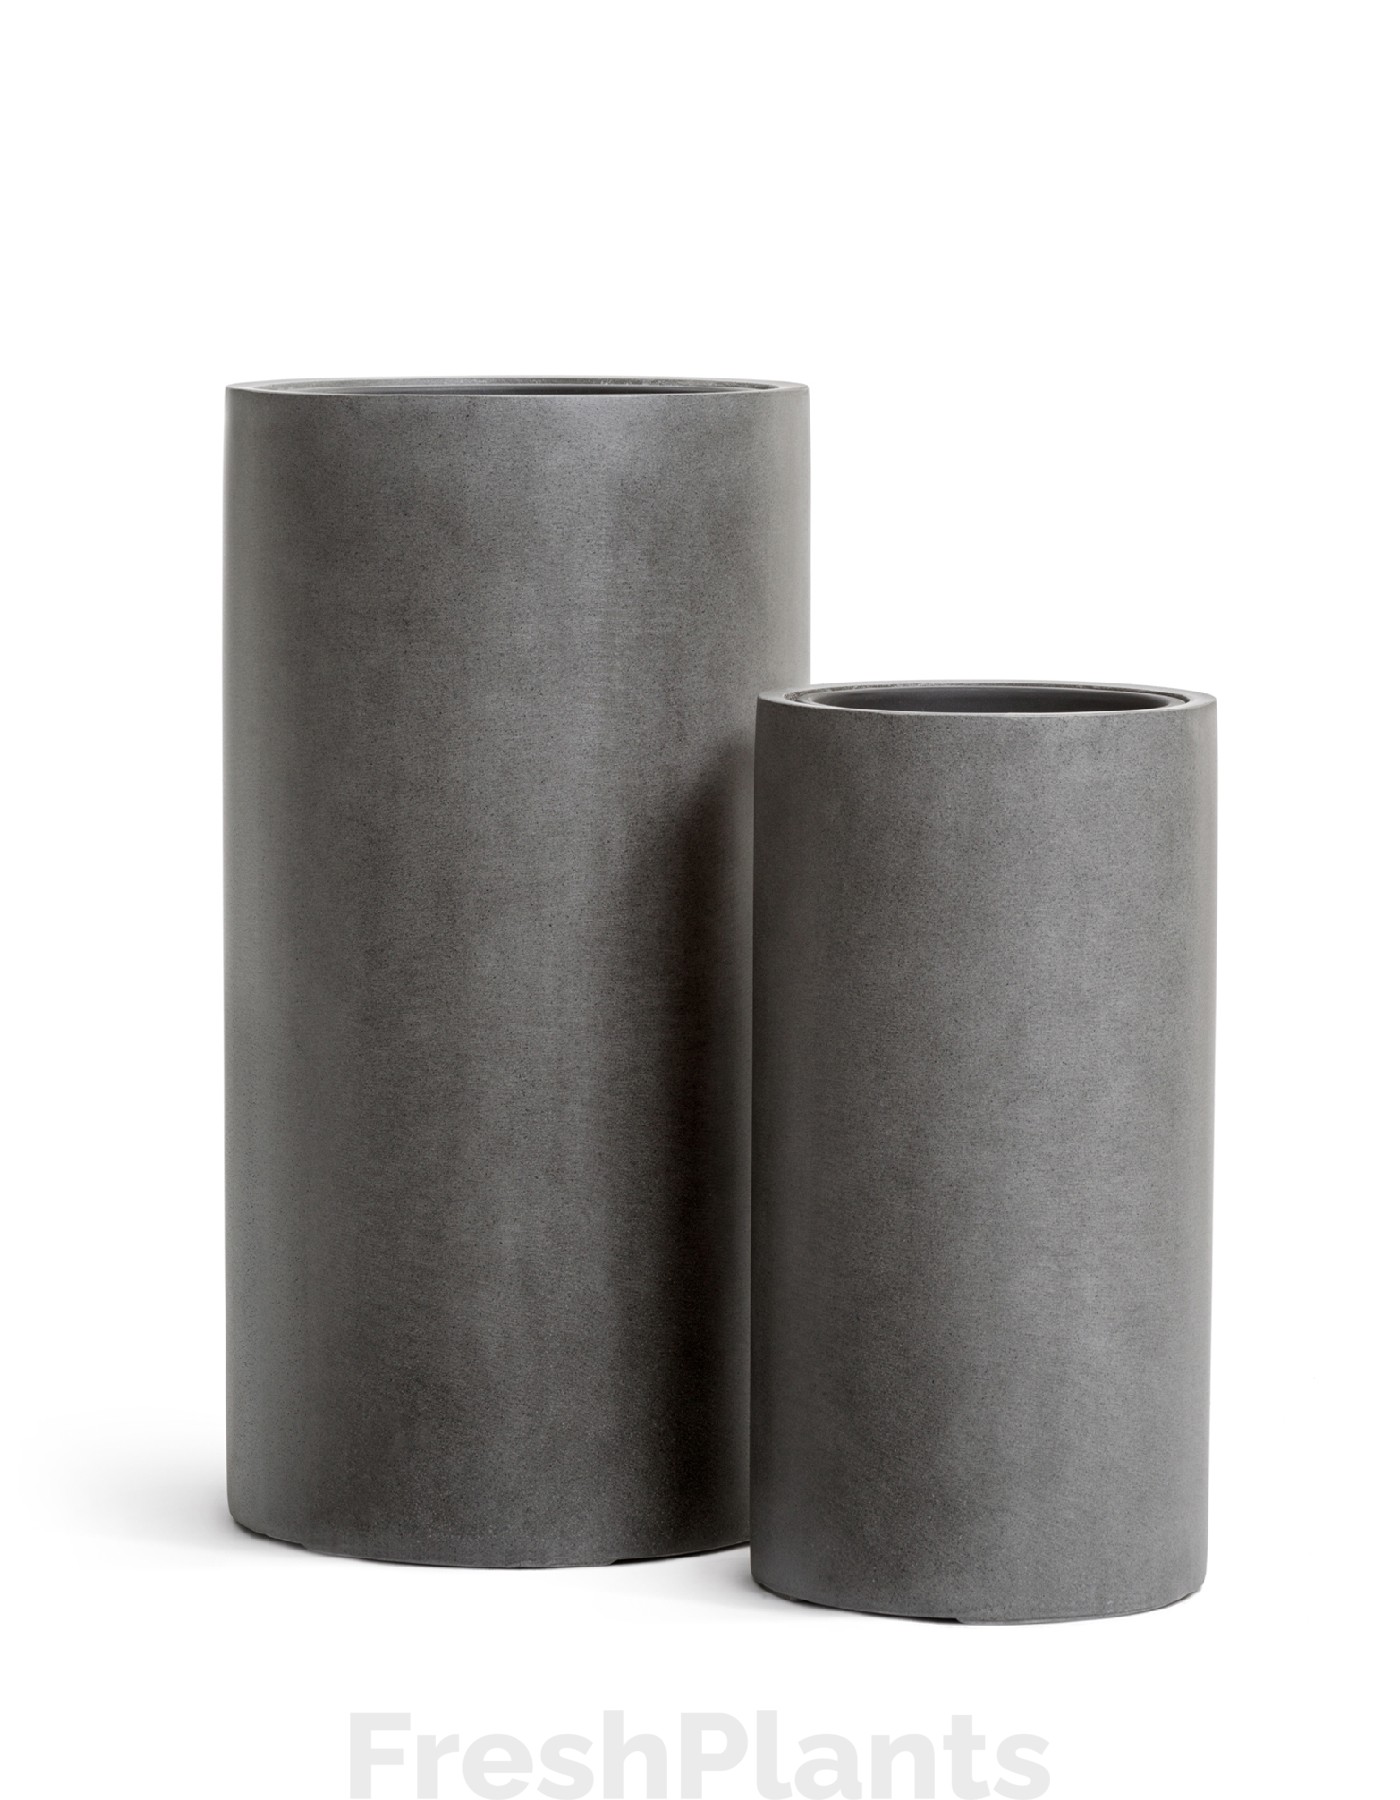 Кашпо TREEZ Effectory - Beton - Высокий цилиндр - Тёмно-серый бетон 41.3320-02-029-GR-60, 41.3320-02-029-GR-80